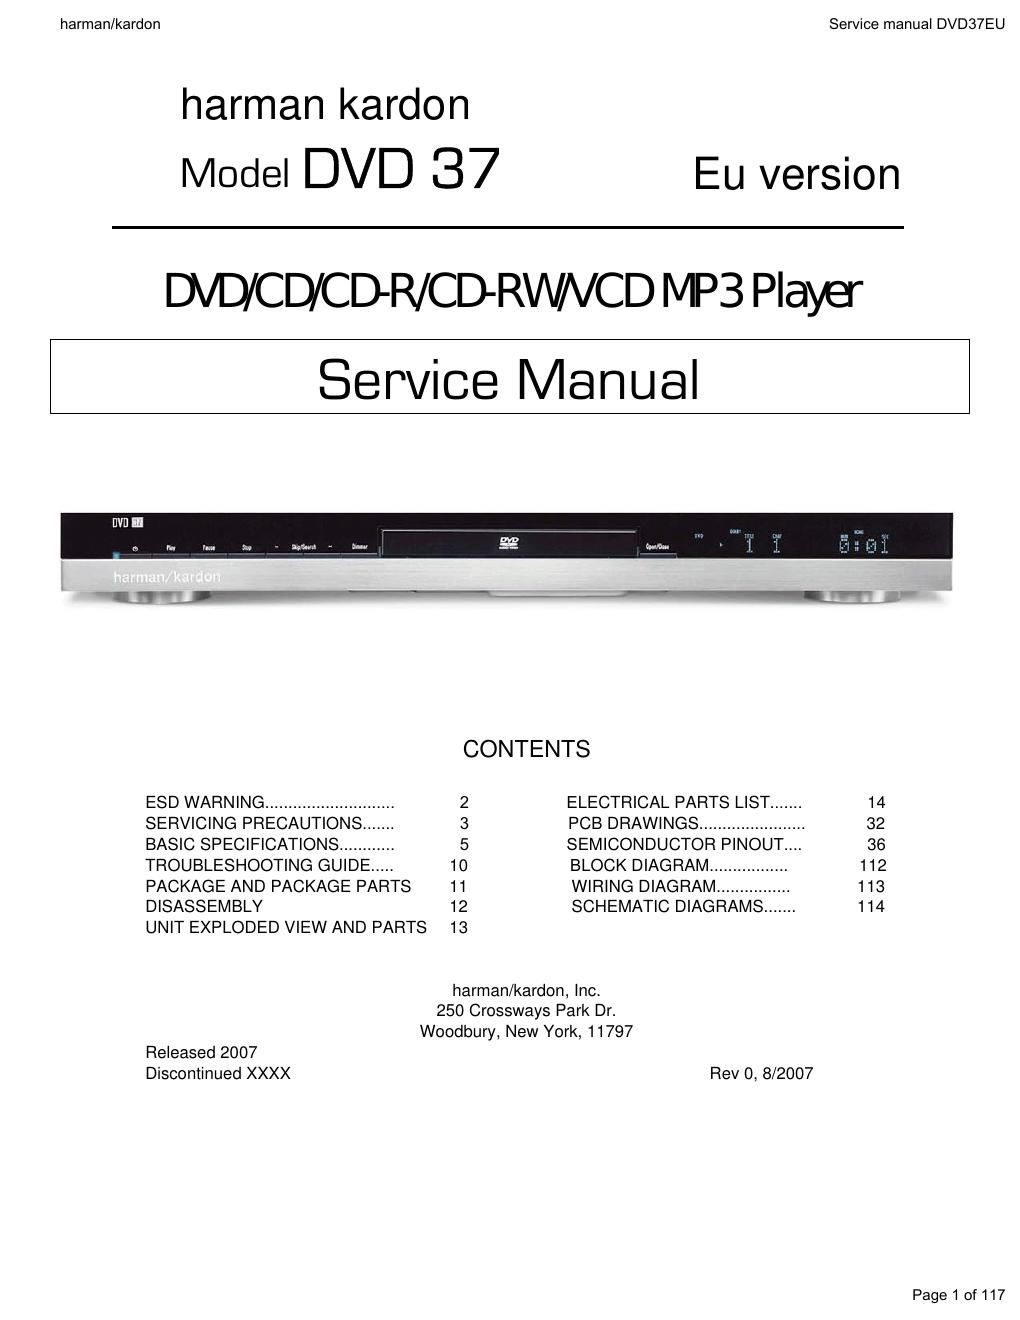 harman kardon dvd 37 230 service manual